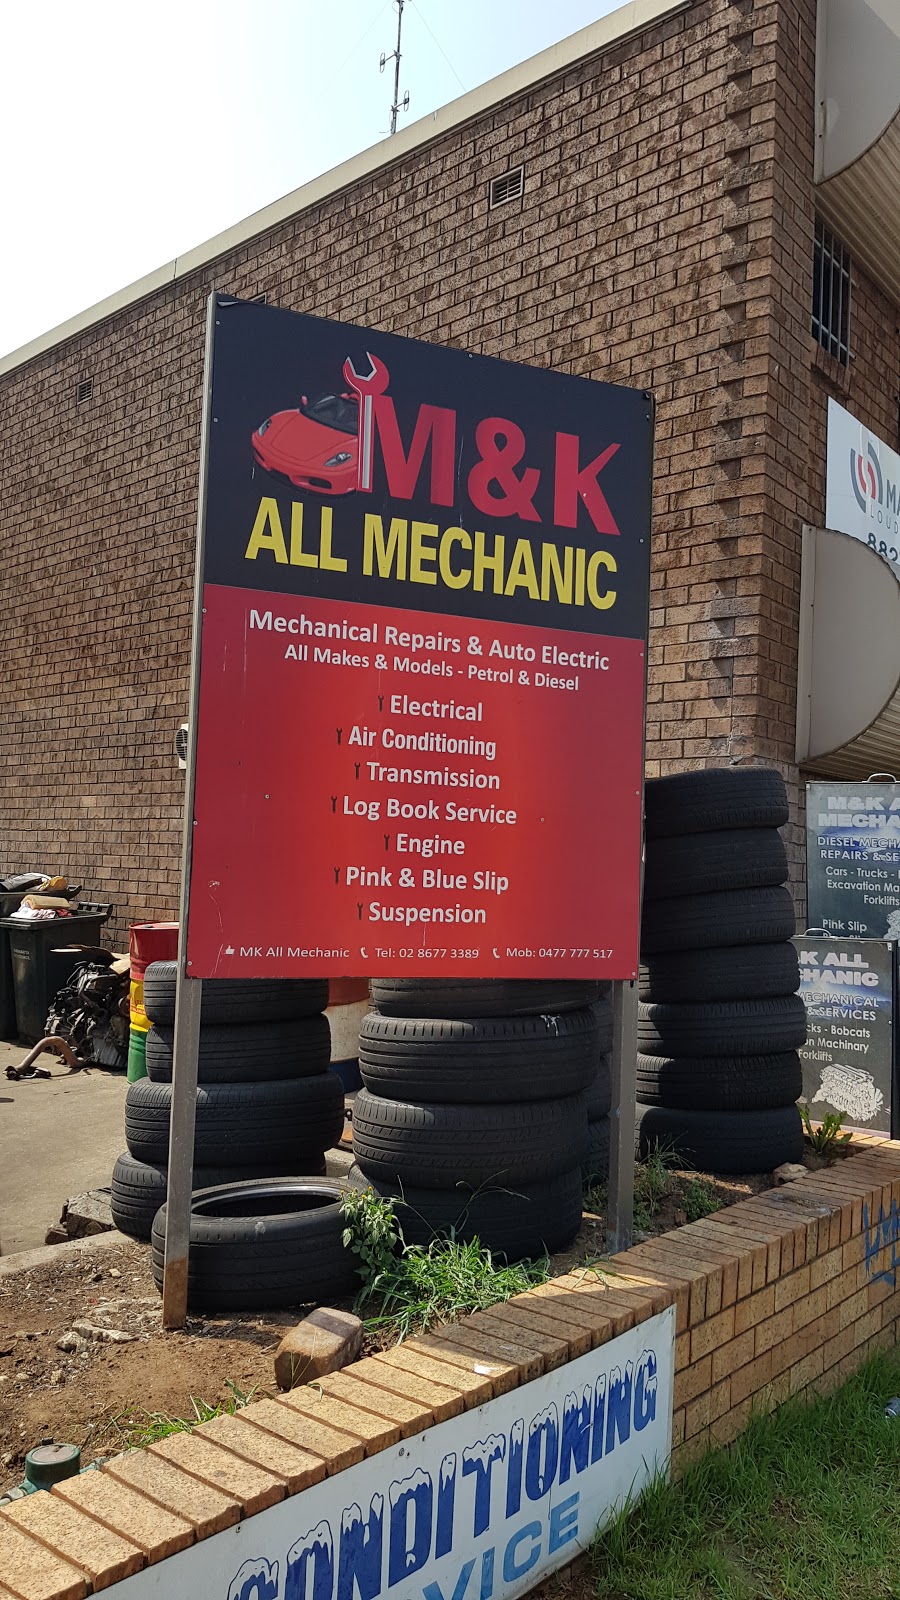 M&K All Mechanic | car repair | 2 Milton St, Granville NSW 2142, Australia | 0286773389 OR +61 2 8677 3389